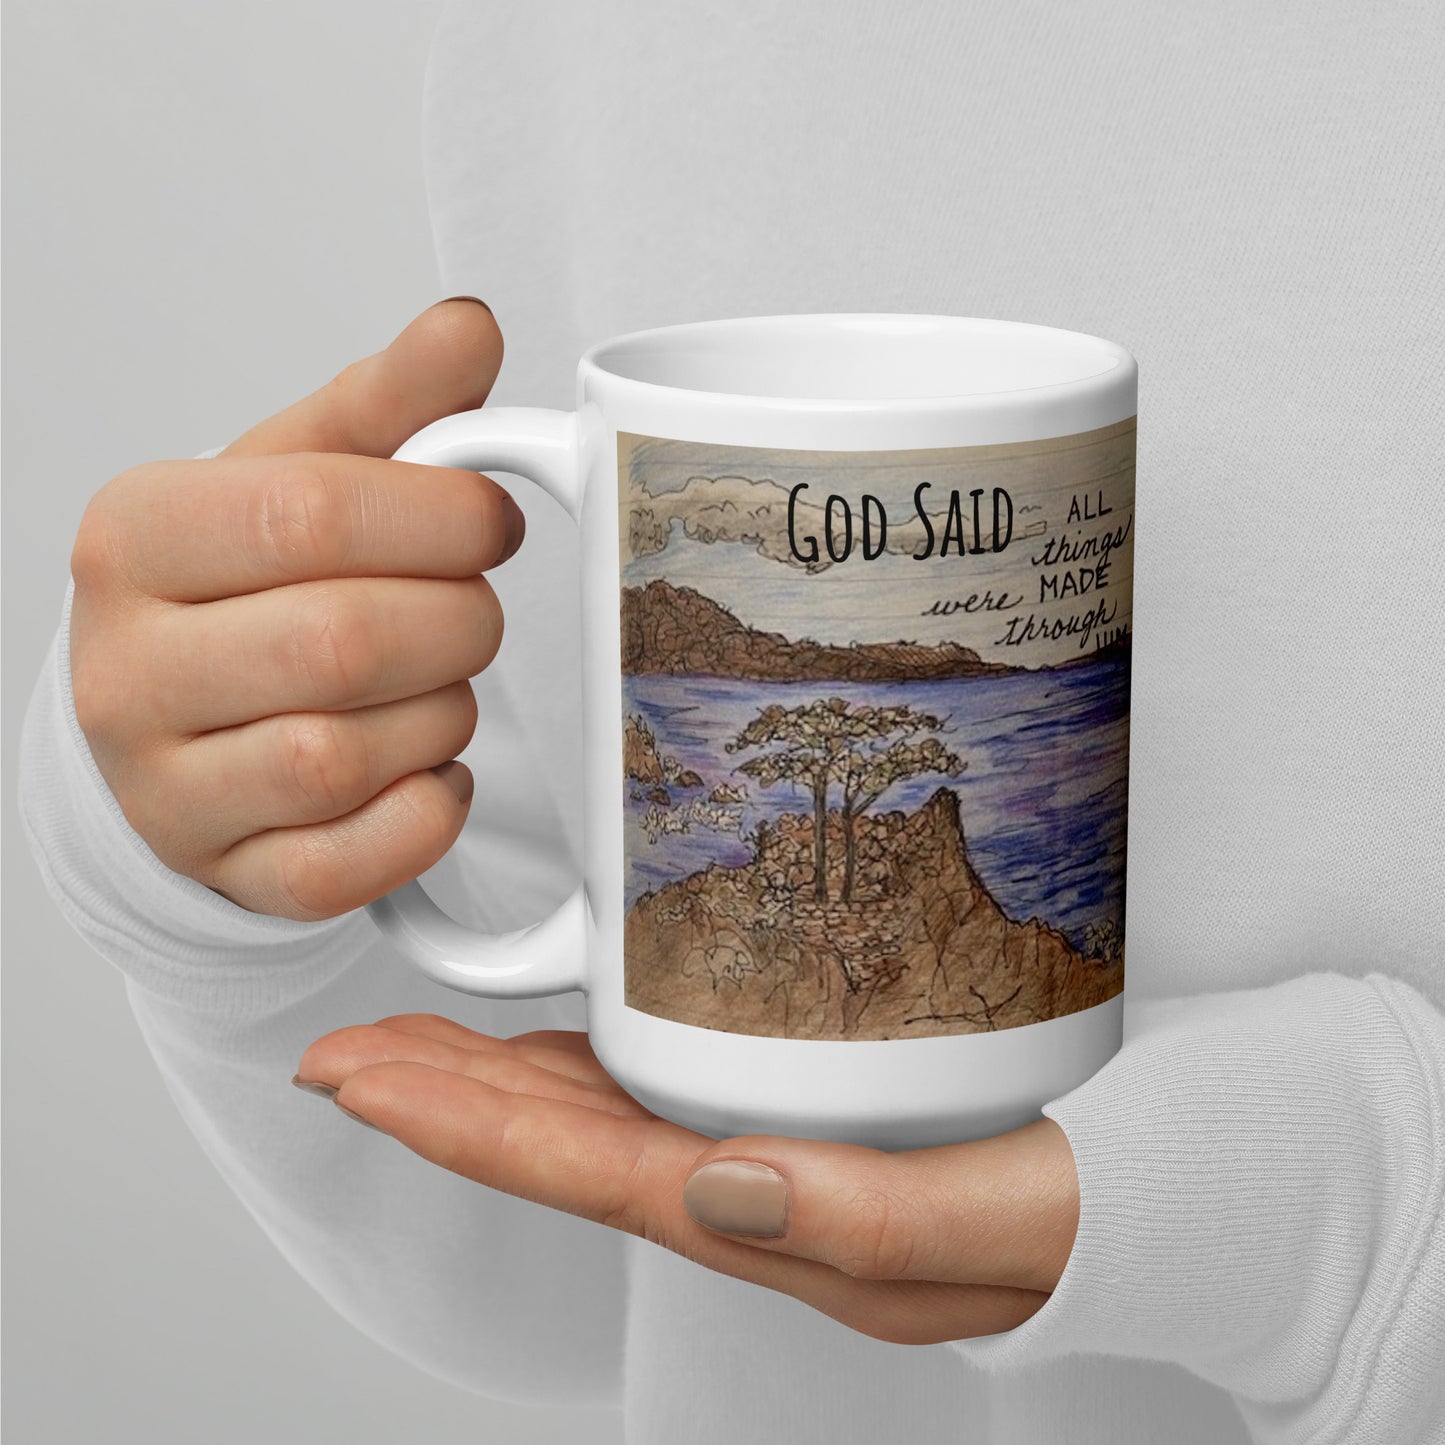 God Said - "God Created All Things" White glossy mug